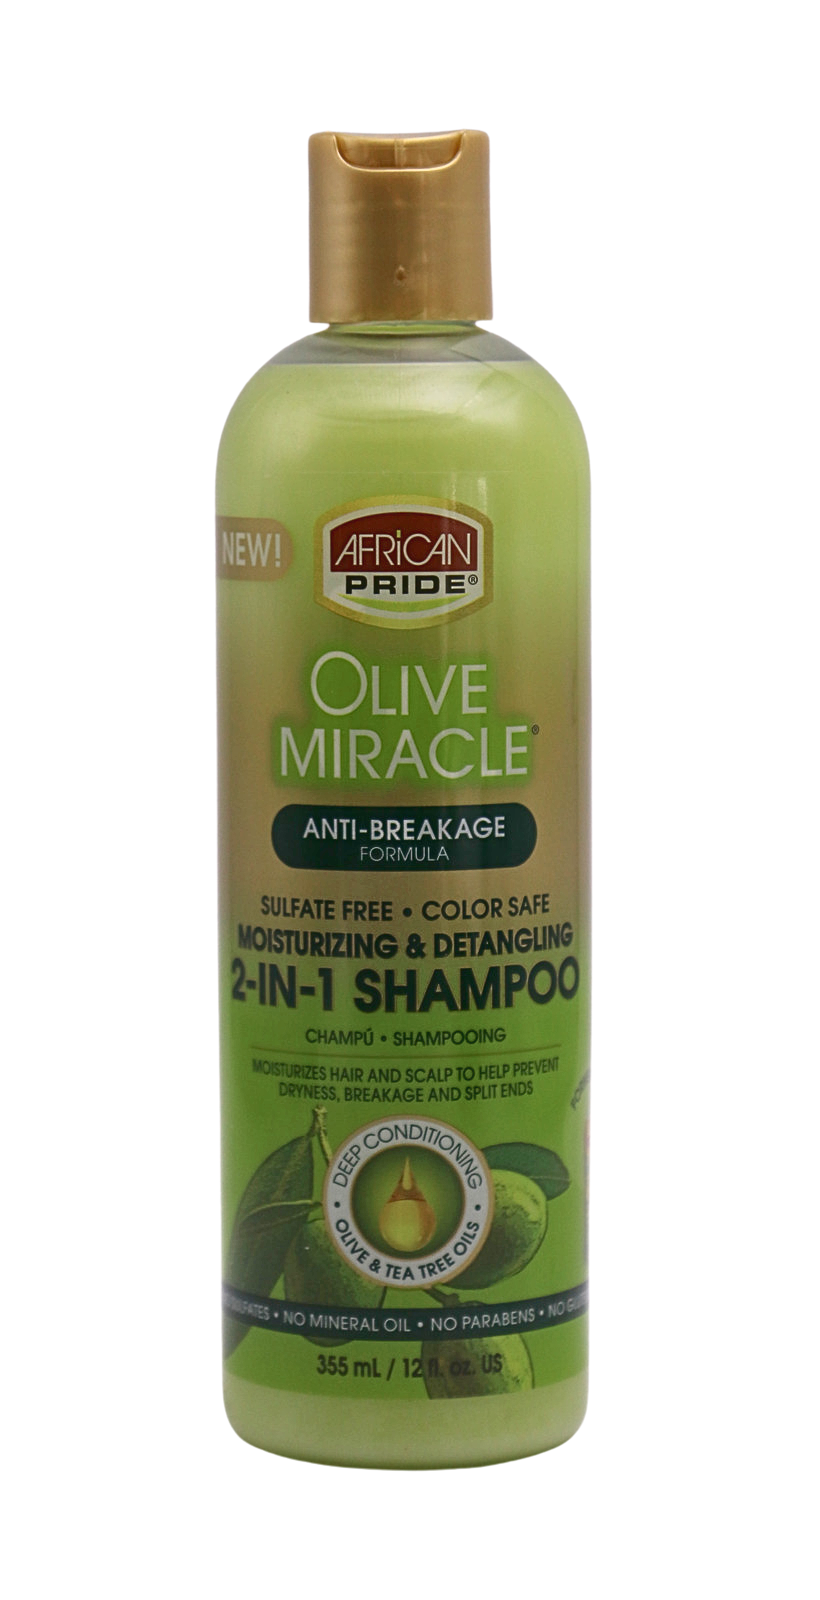 Olive Miracle Anti Breakage  2-IN-1 SHAMPOO